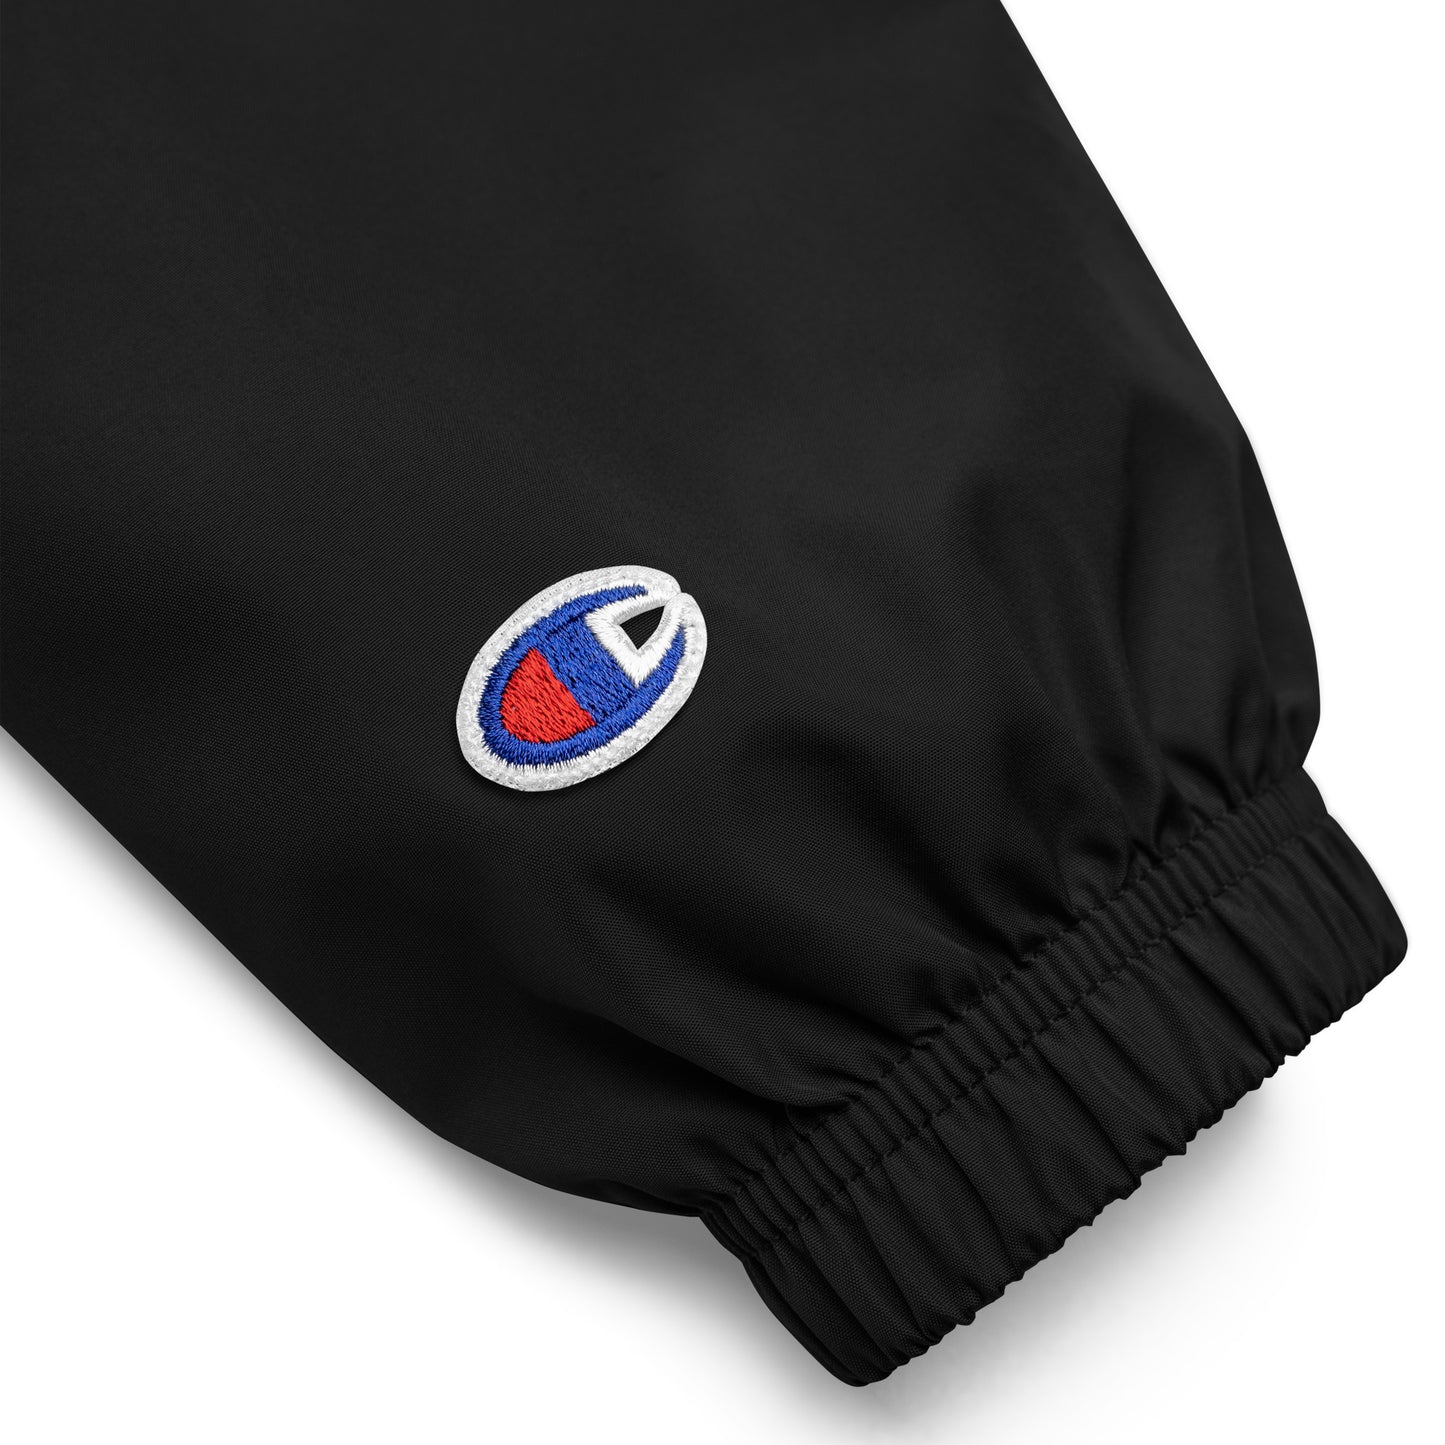 Embroidered Packable Jacket - Livestock Show Charolais Steer - Wash Rack Pullover Jacket